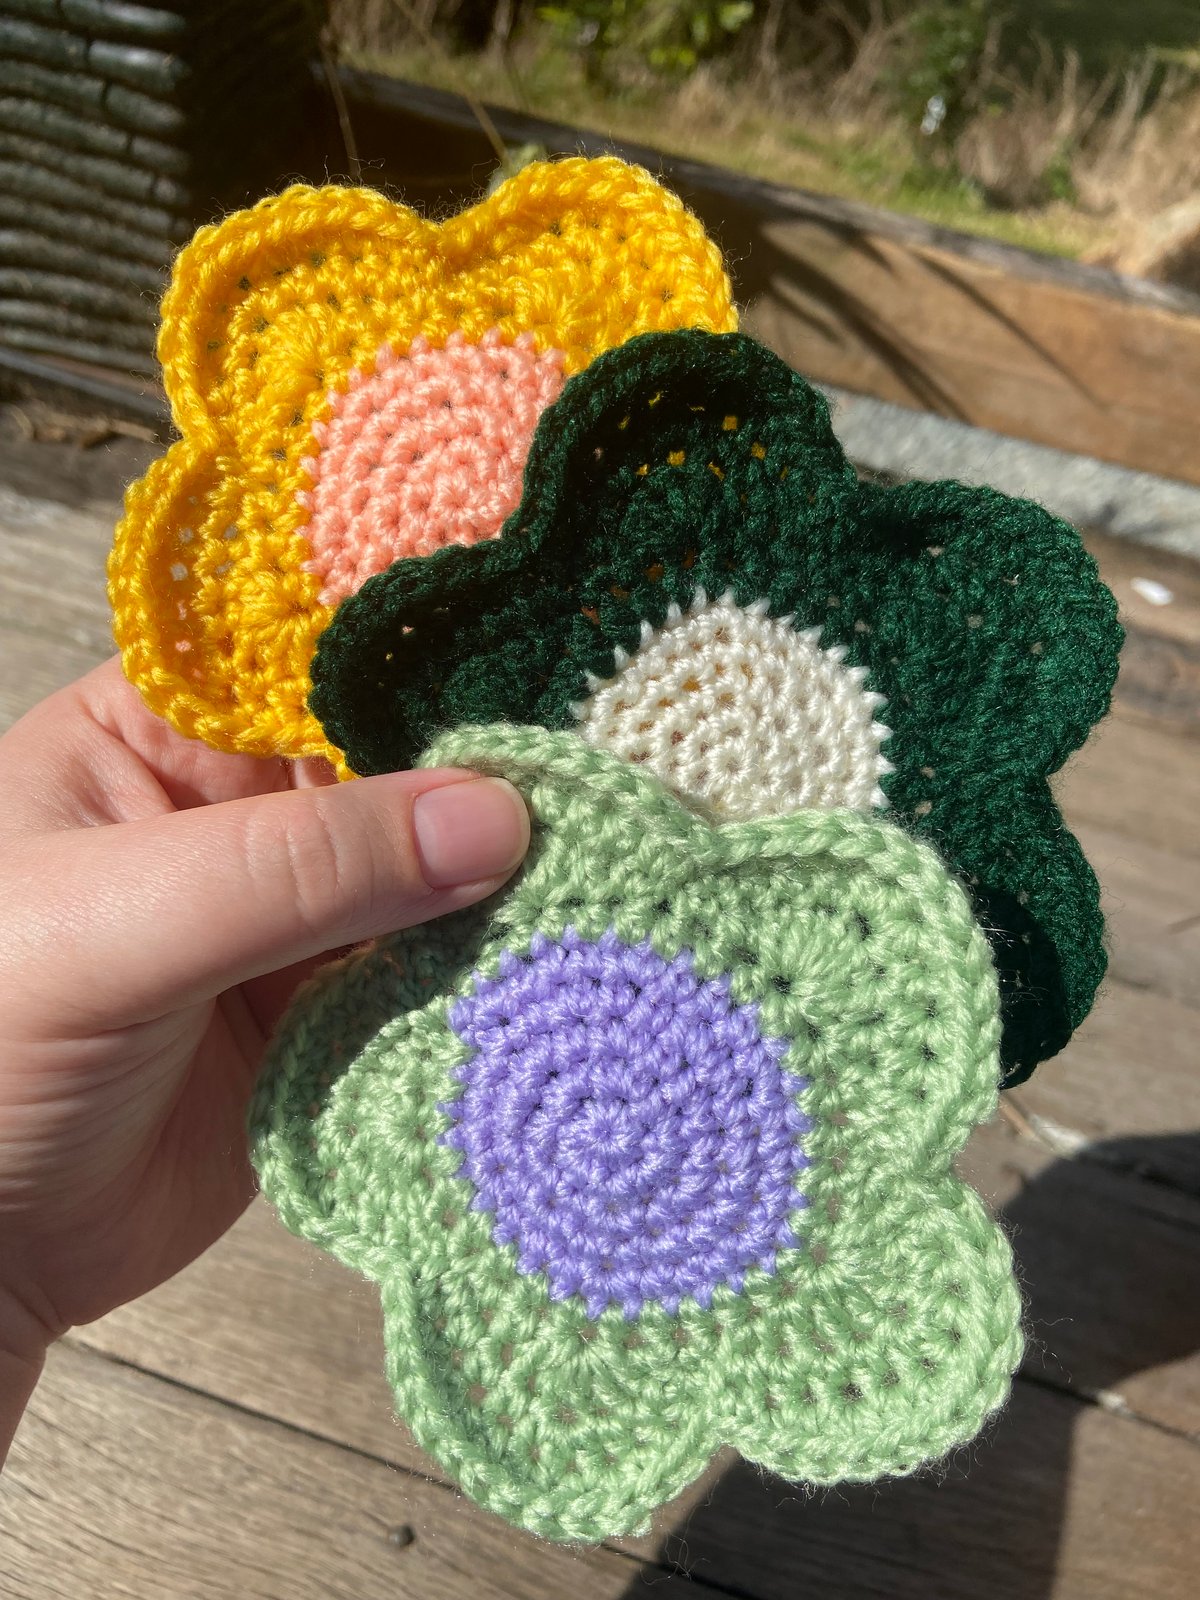 Image of Crochet Flower Coasters